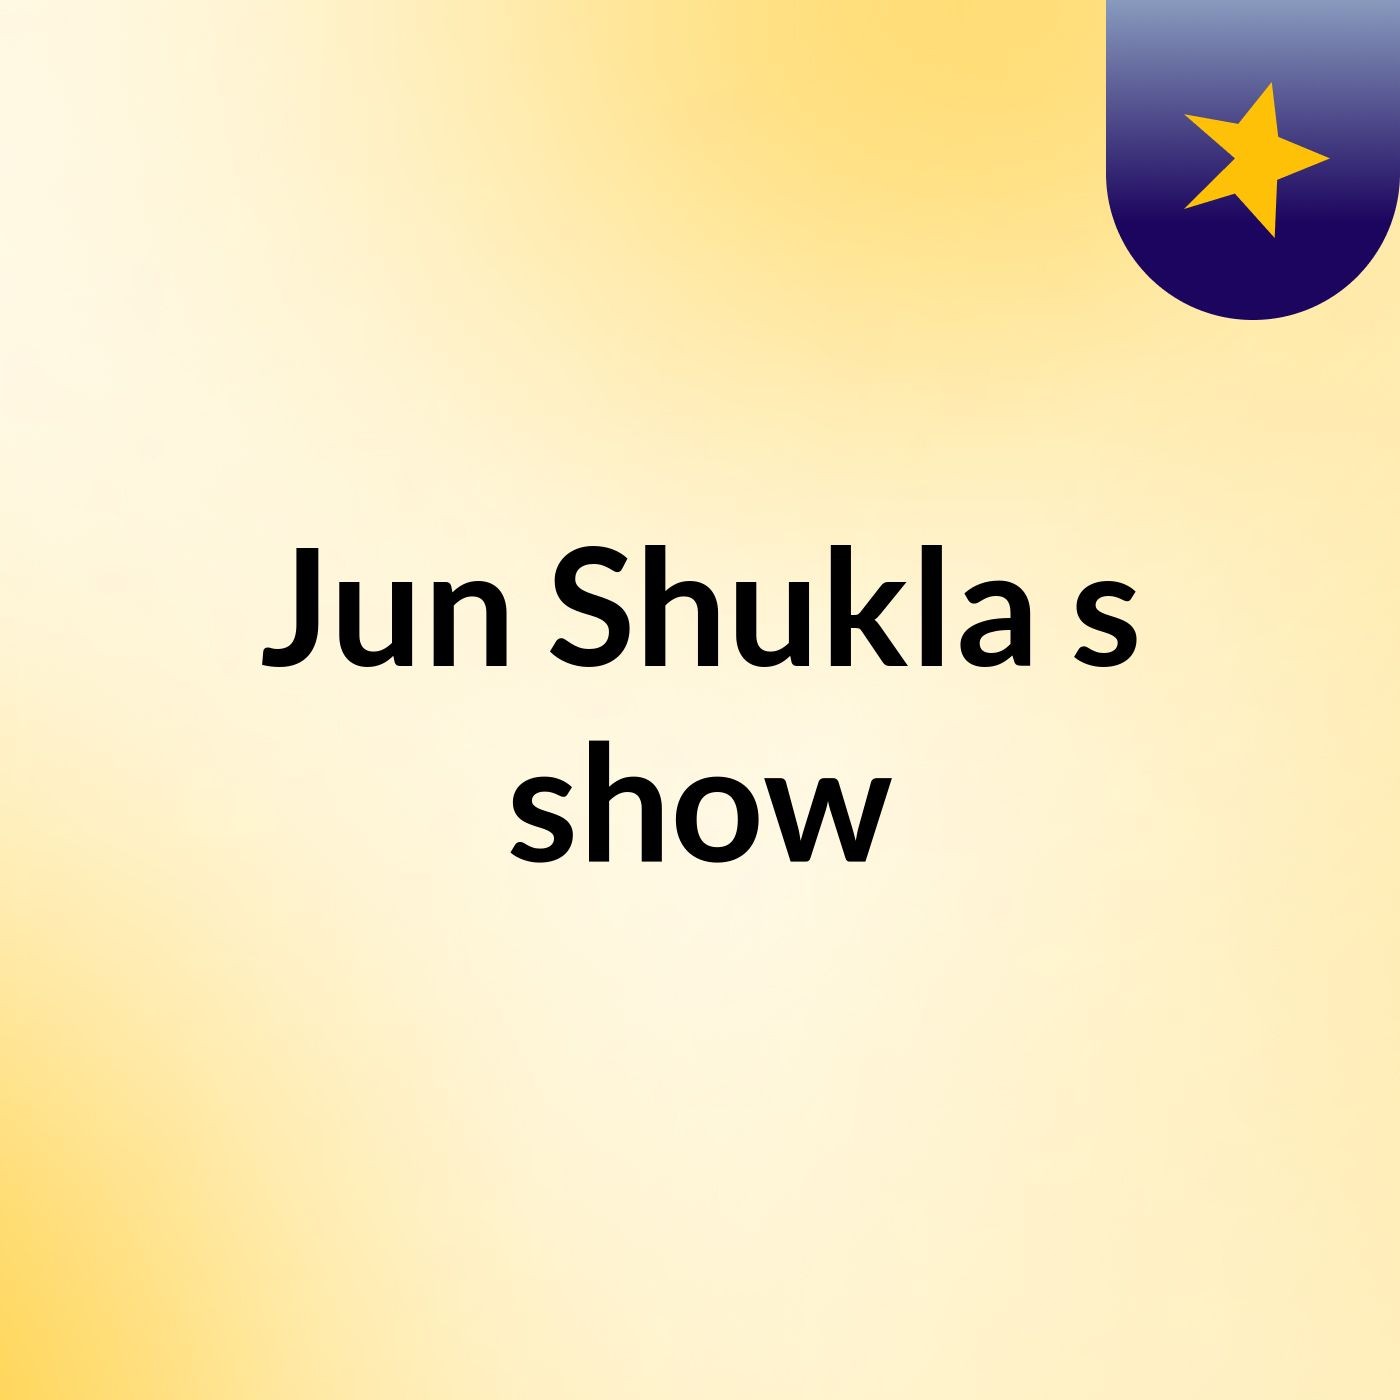 Jun Shukla's show